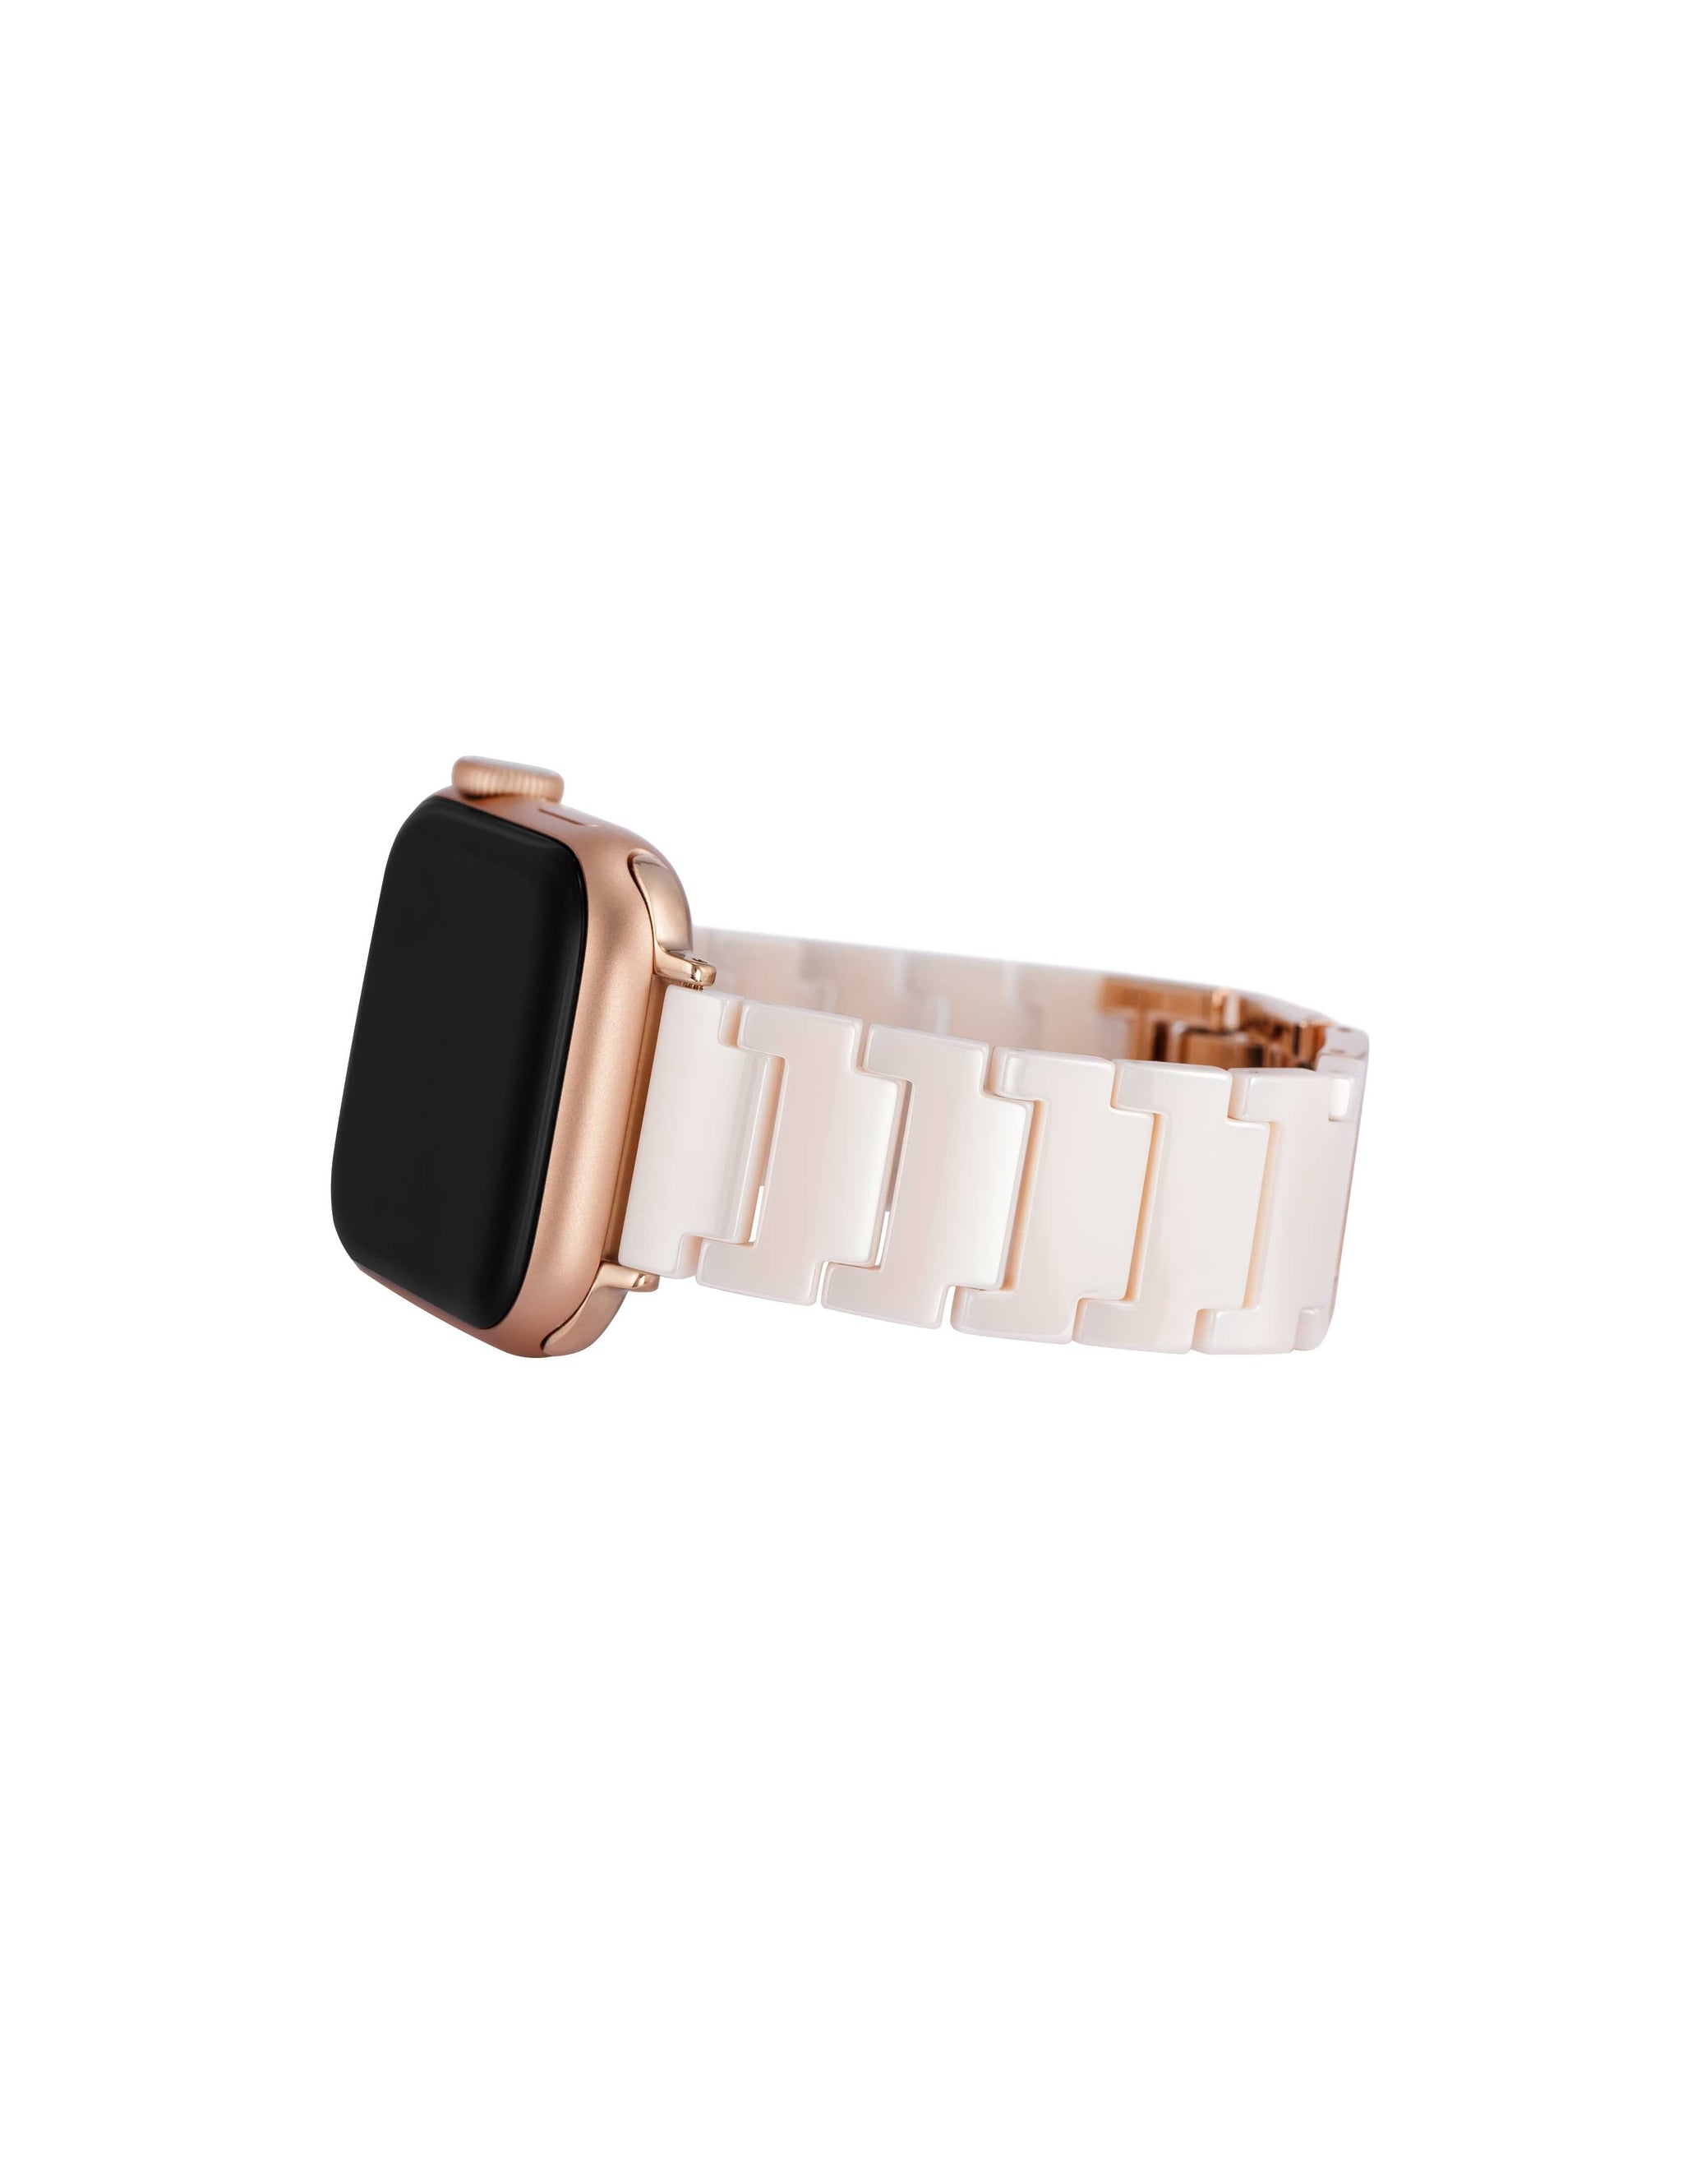 Ceramic Bracelet Band for Apple Klein Watch¨ Gold-Tone Anne | Black/Rose